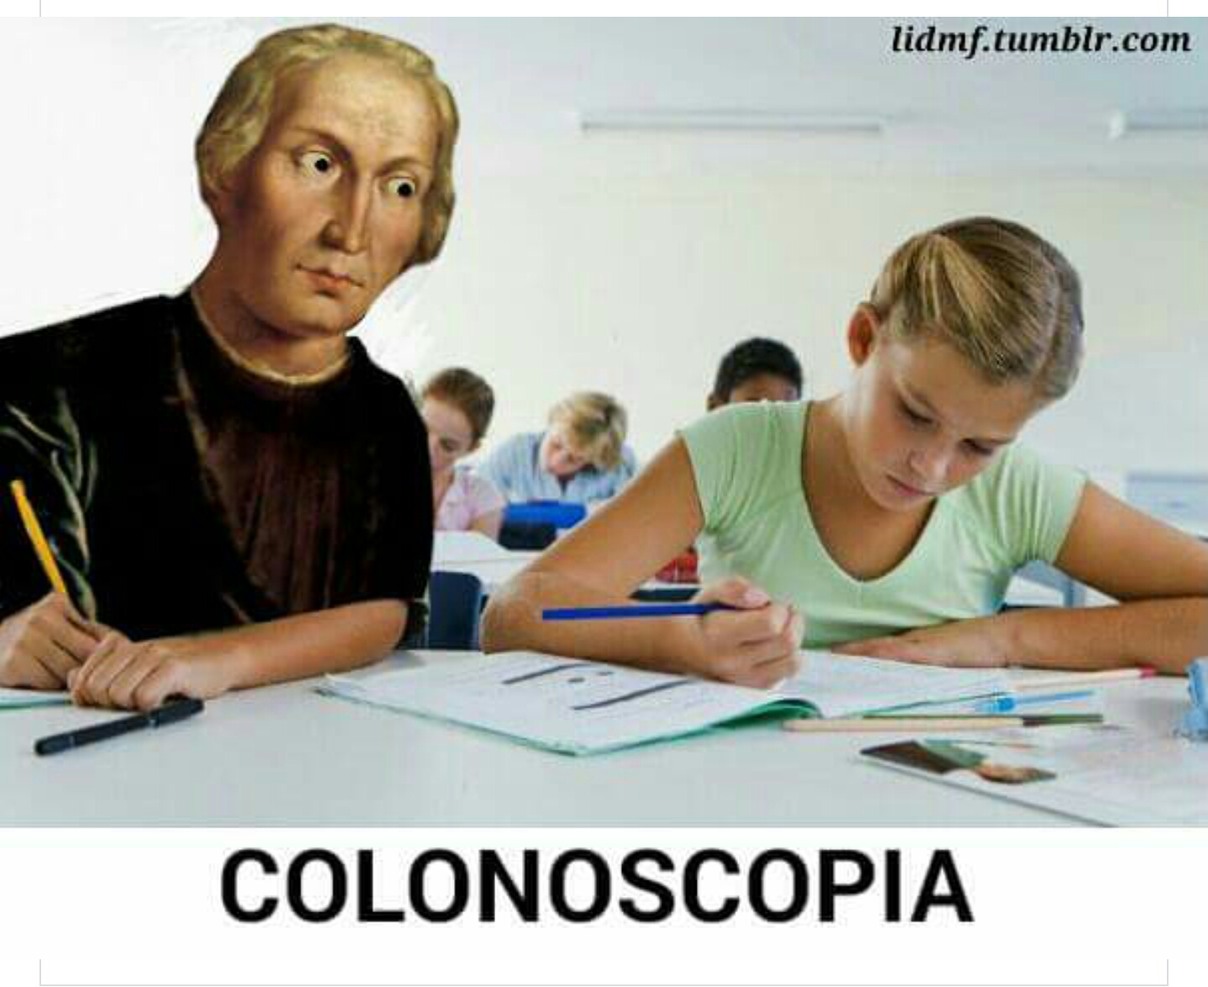 COLONOSCOPIA - meme